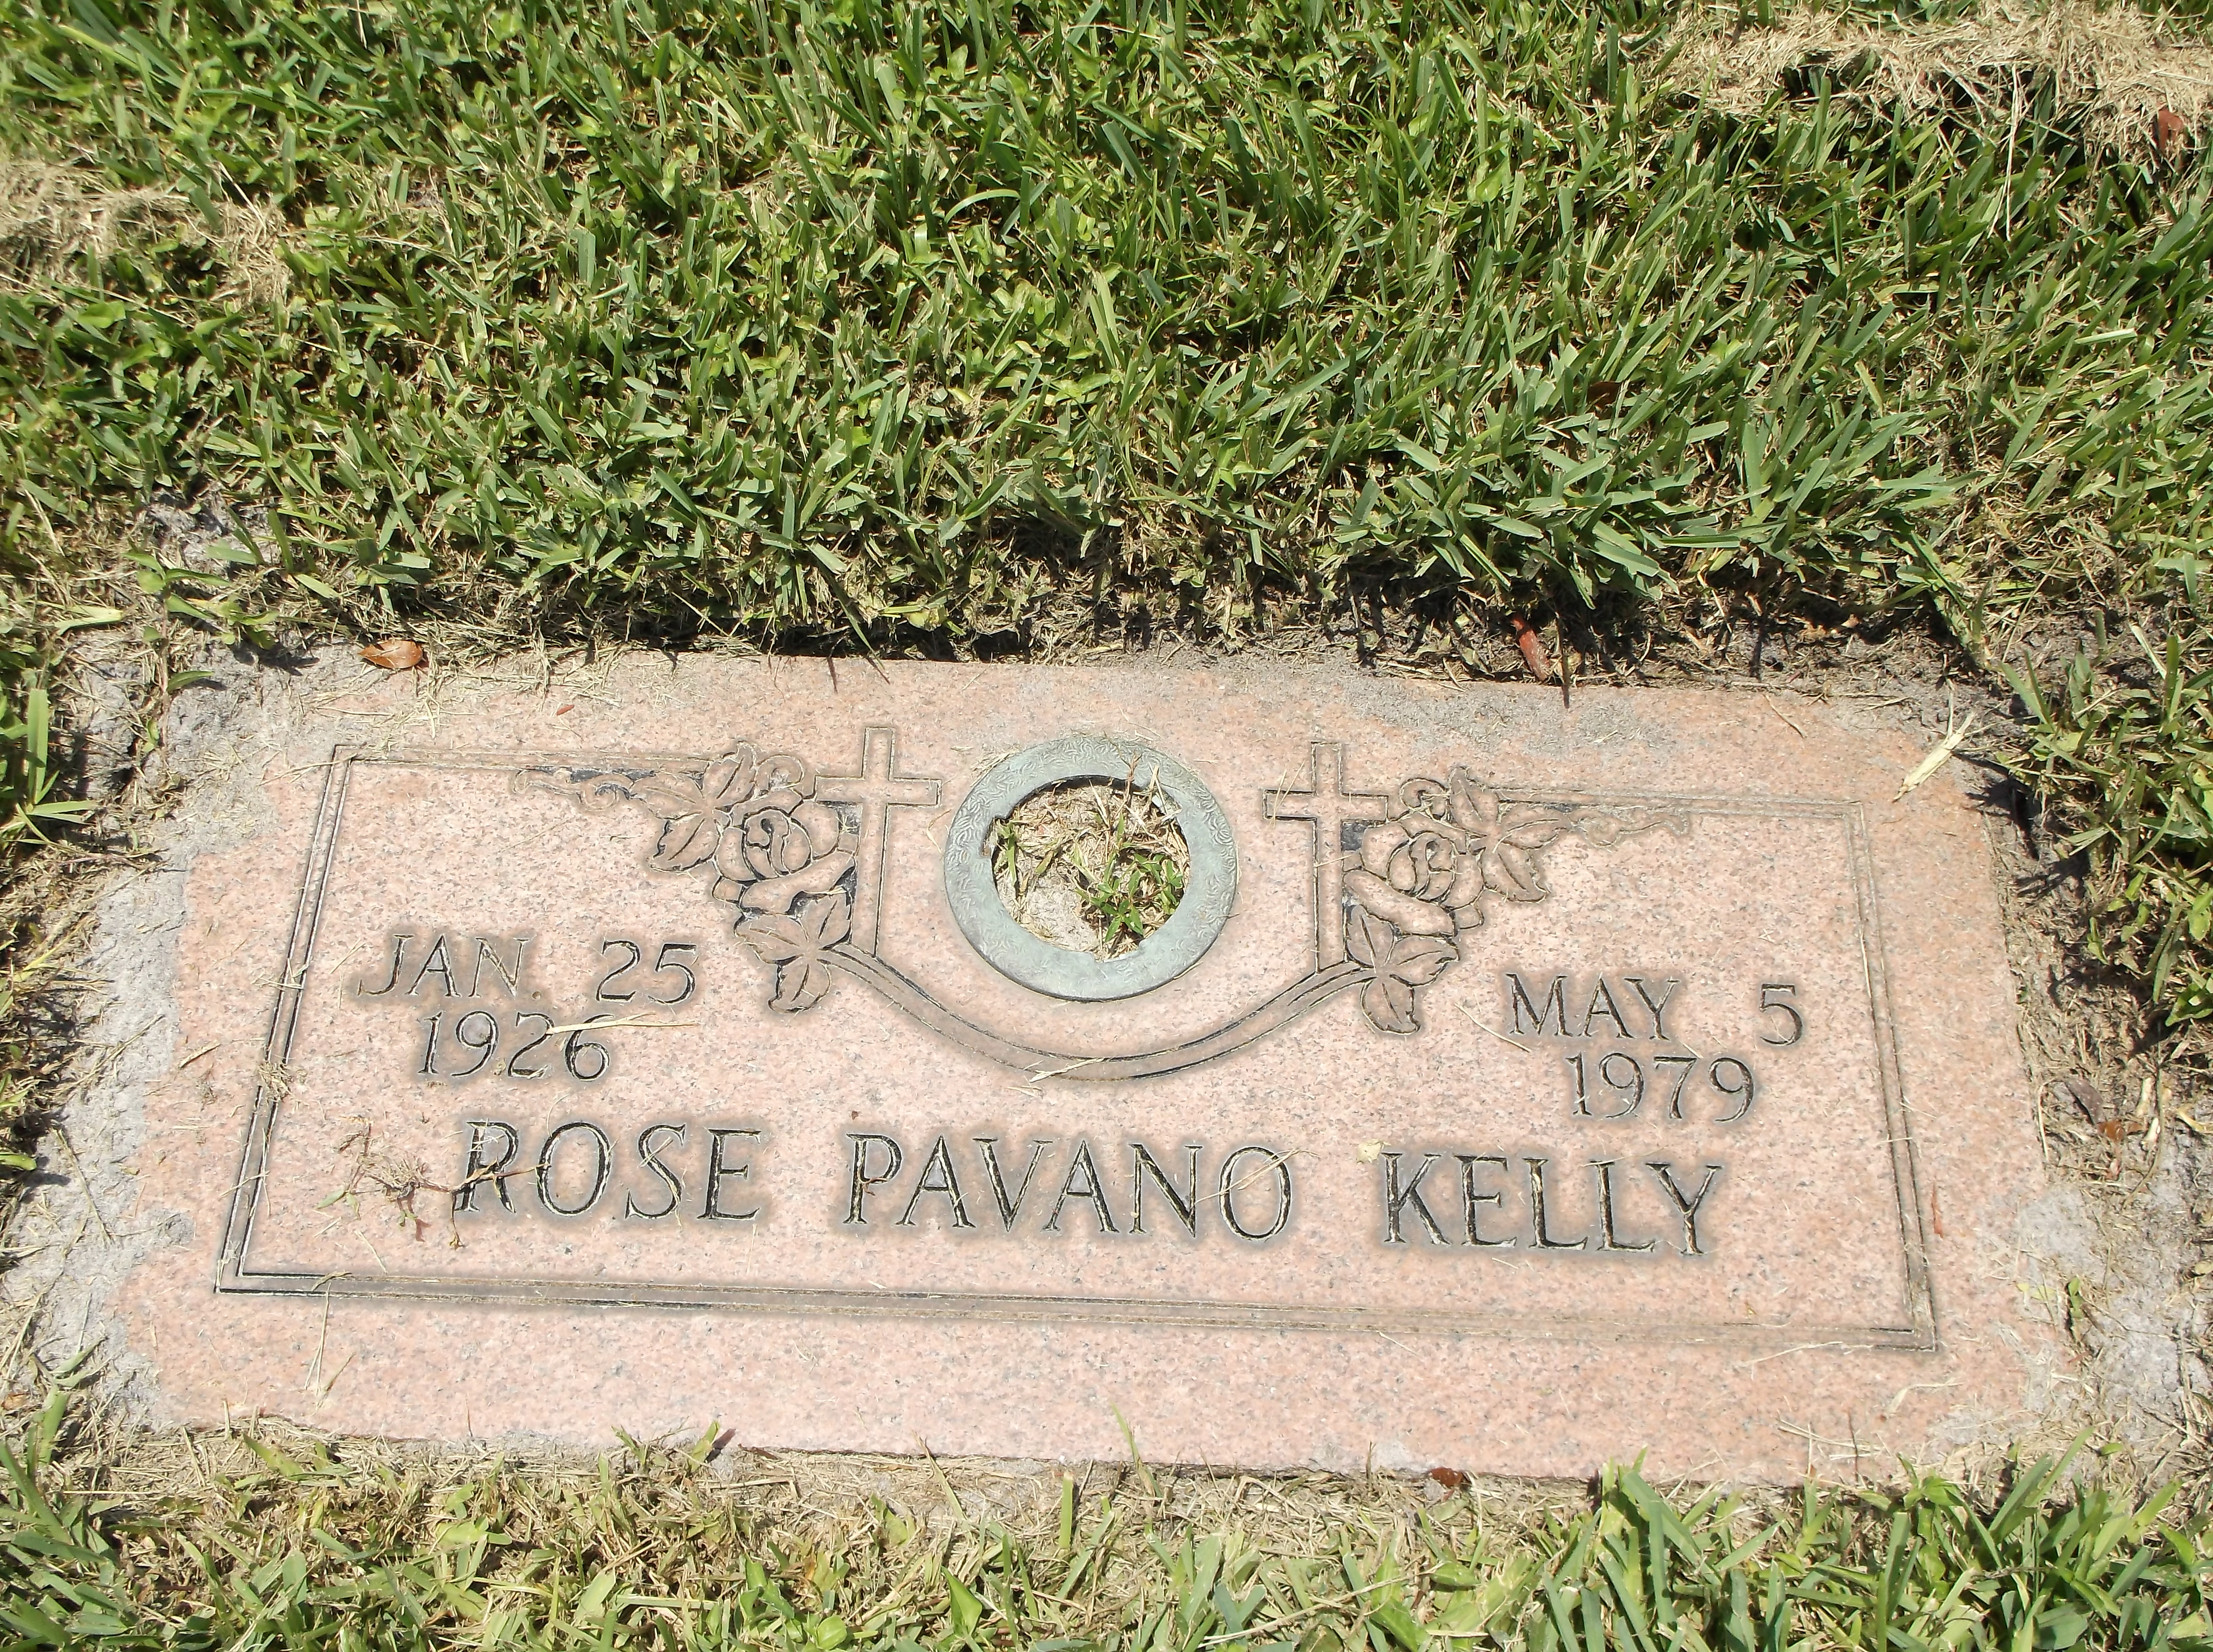 Rose Pavano Kelly